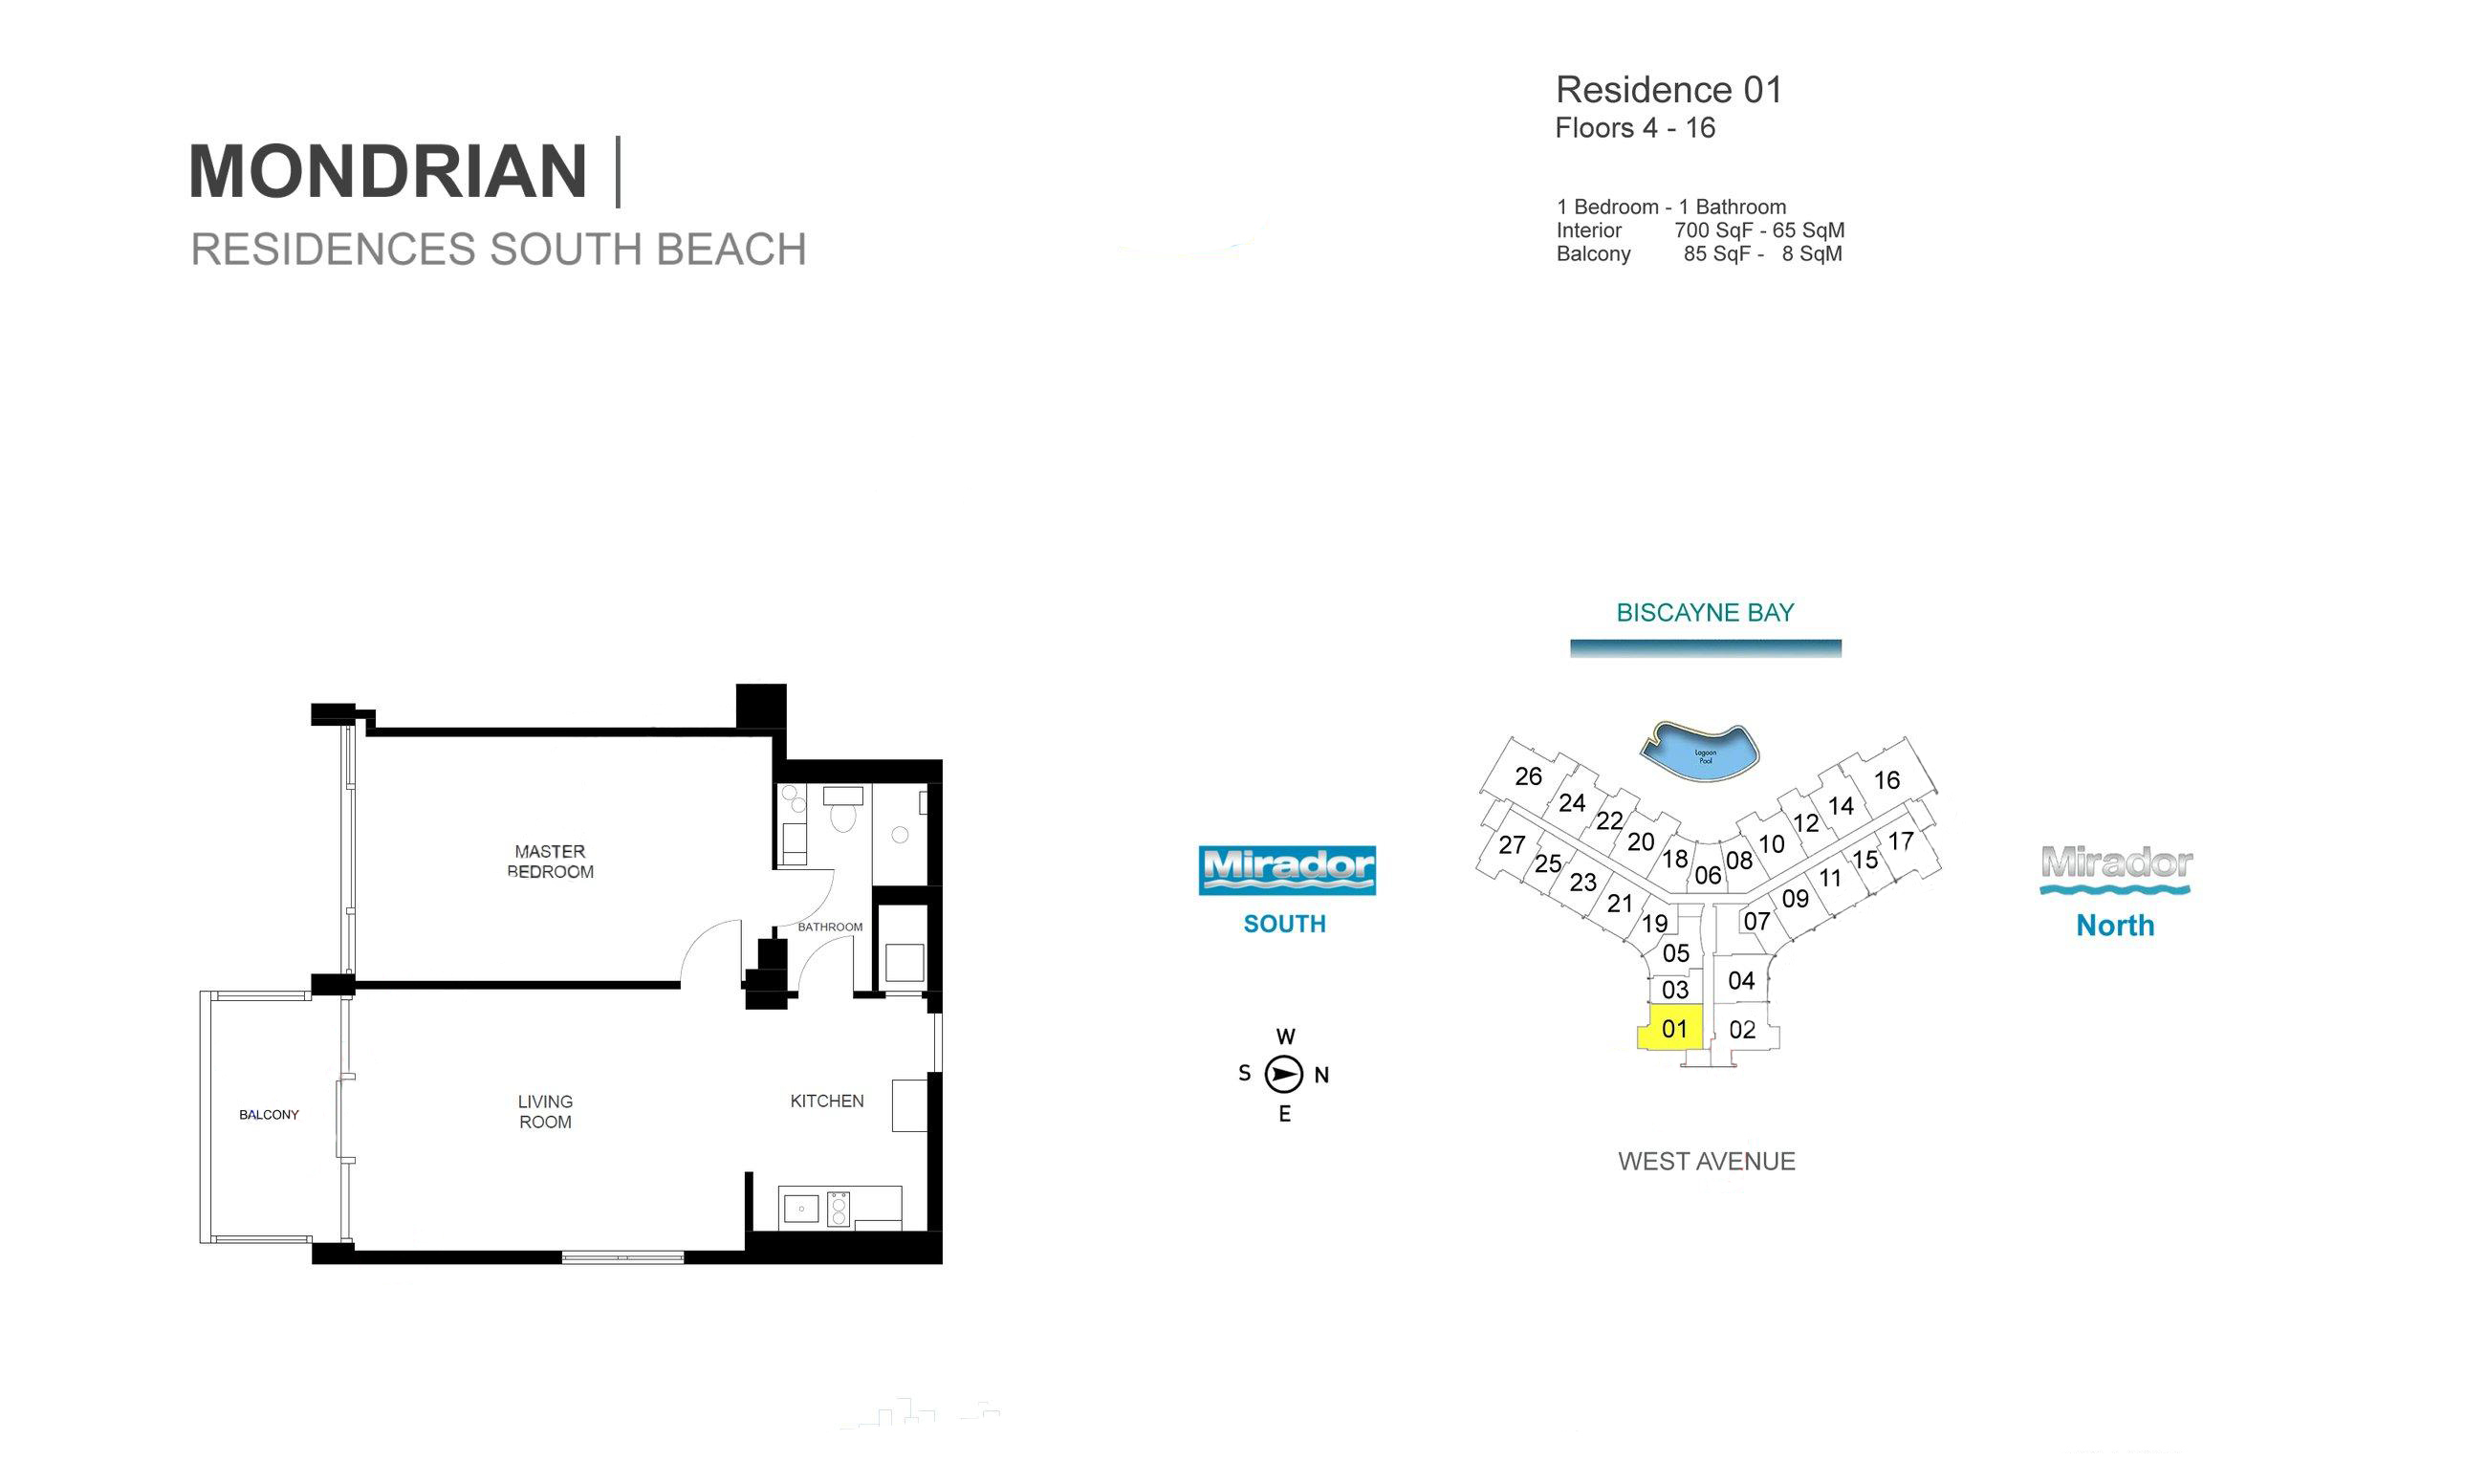 Mondrian South Beach Residence 01